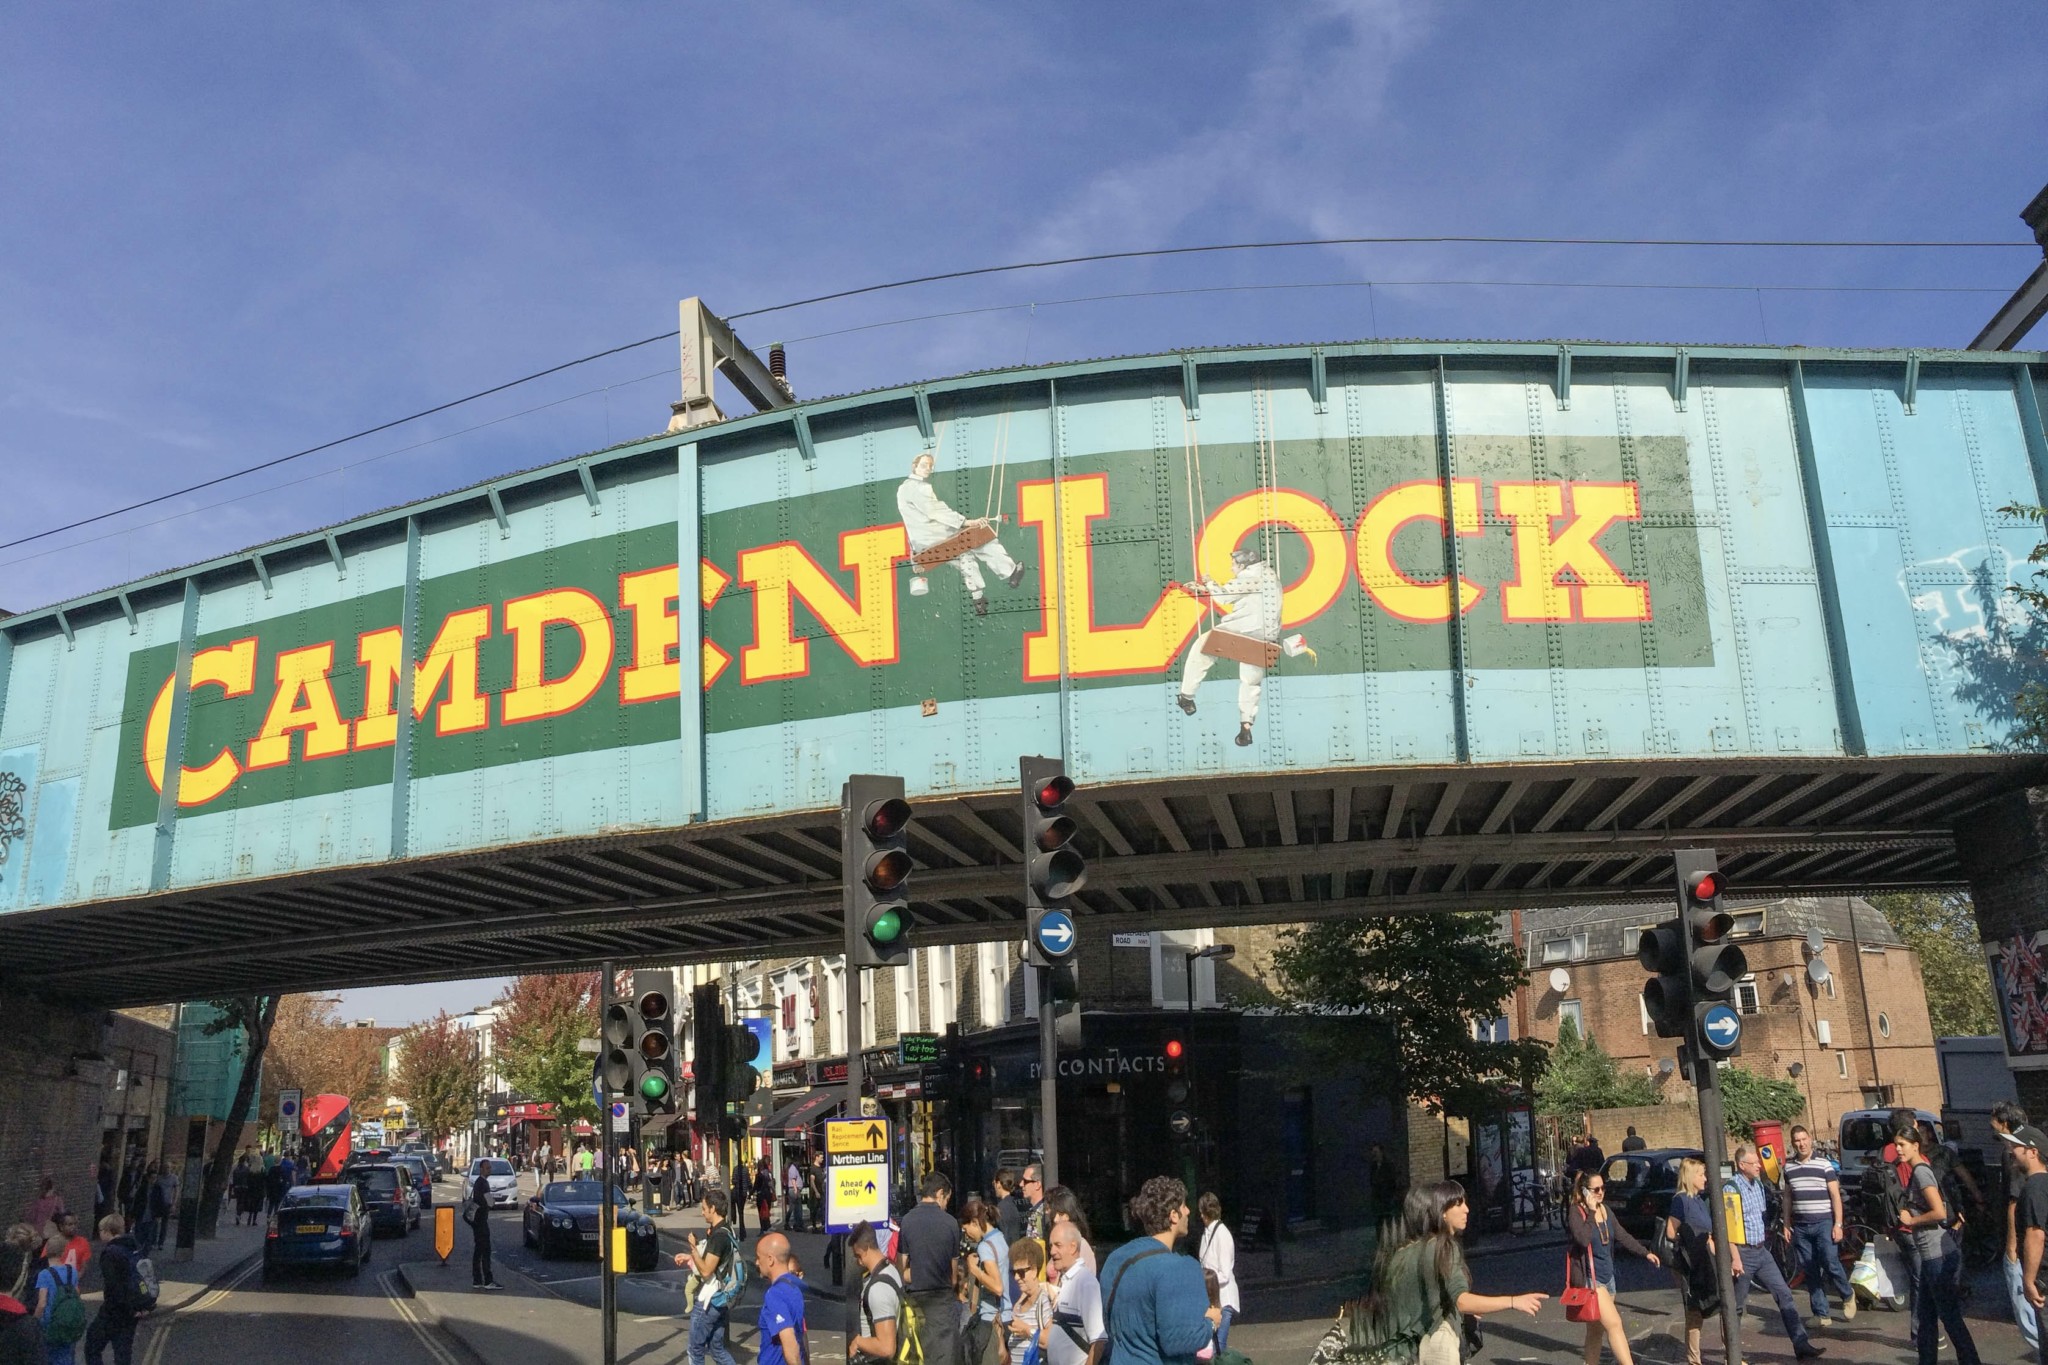 Camden Lock Market in London